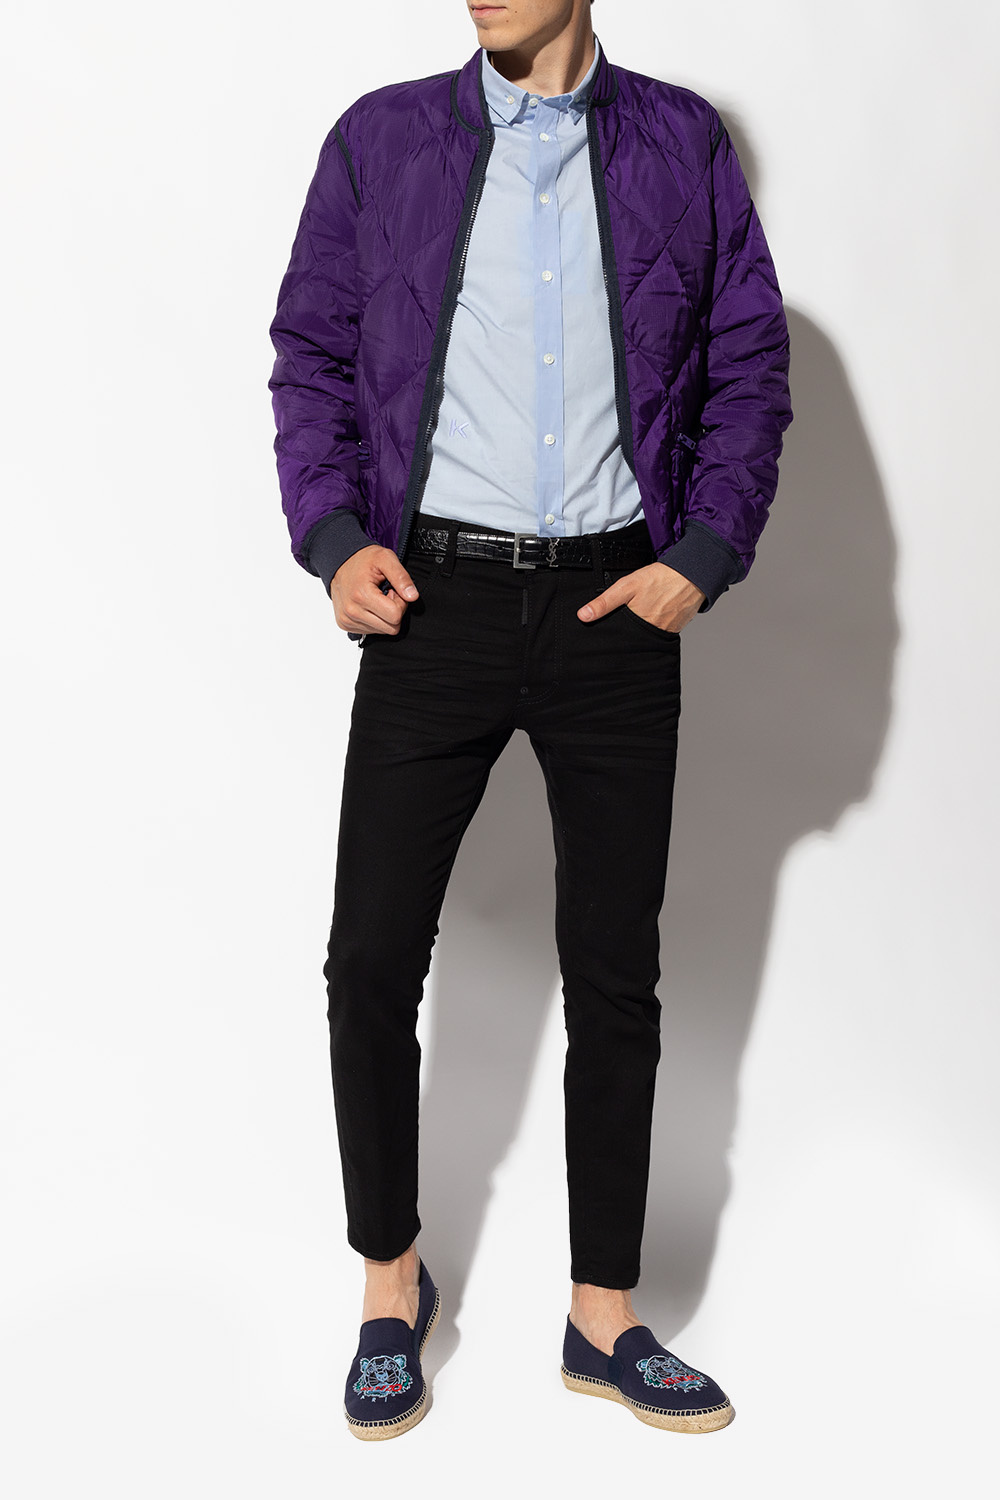 Kenzo Mens brand new airmax 90 persian violet fashion sneakers db0625 001